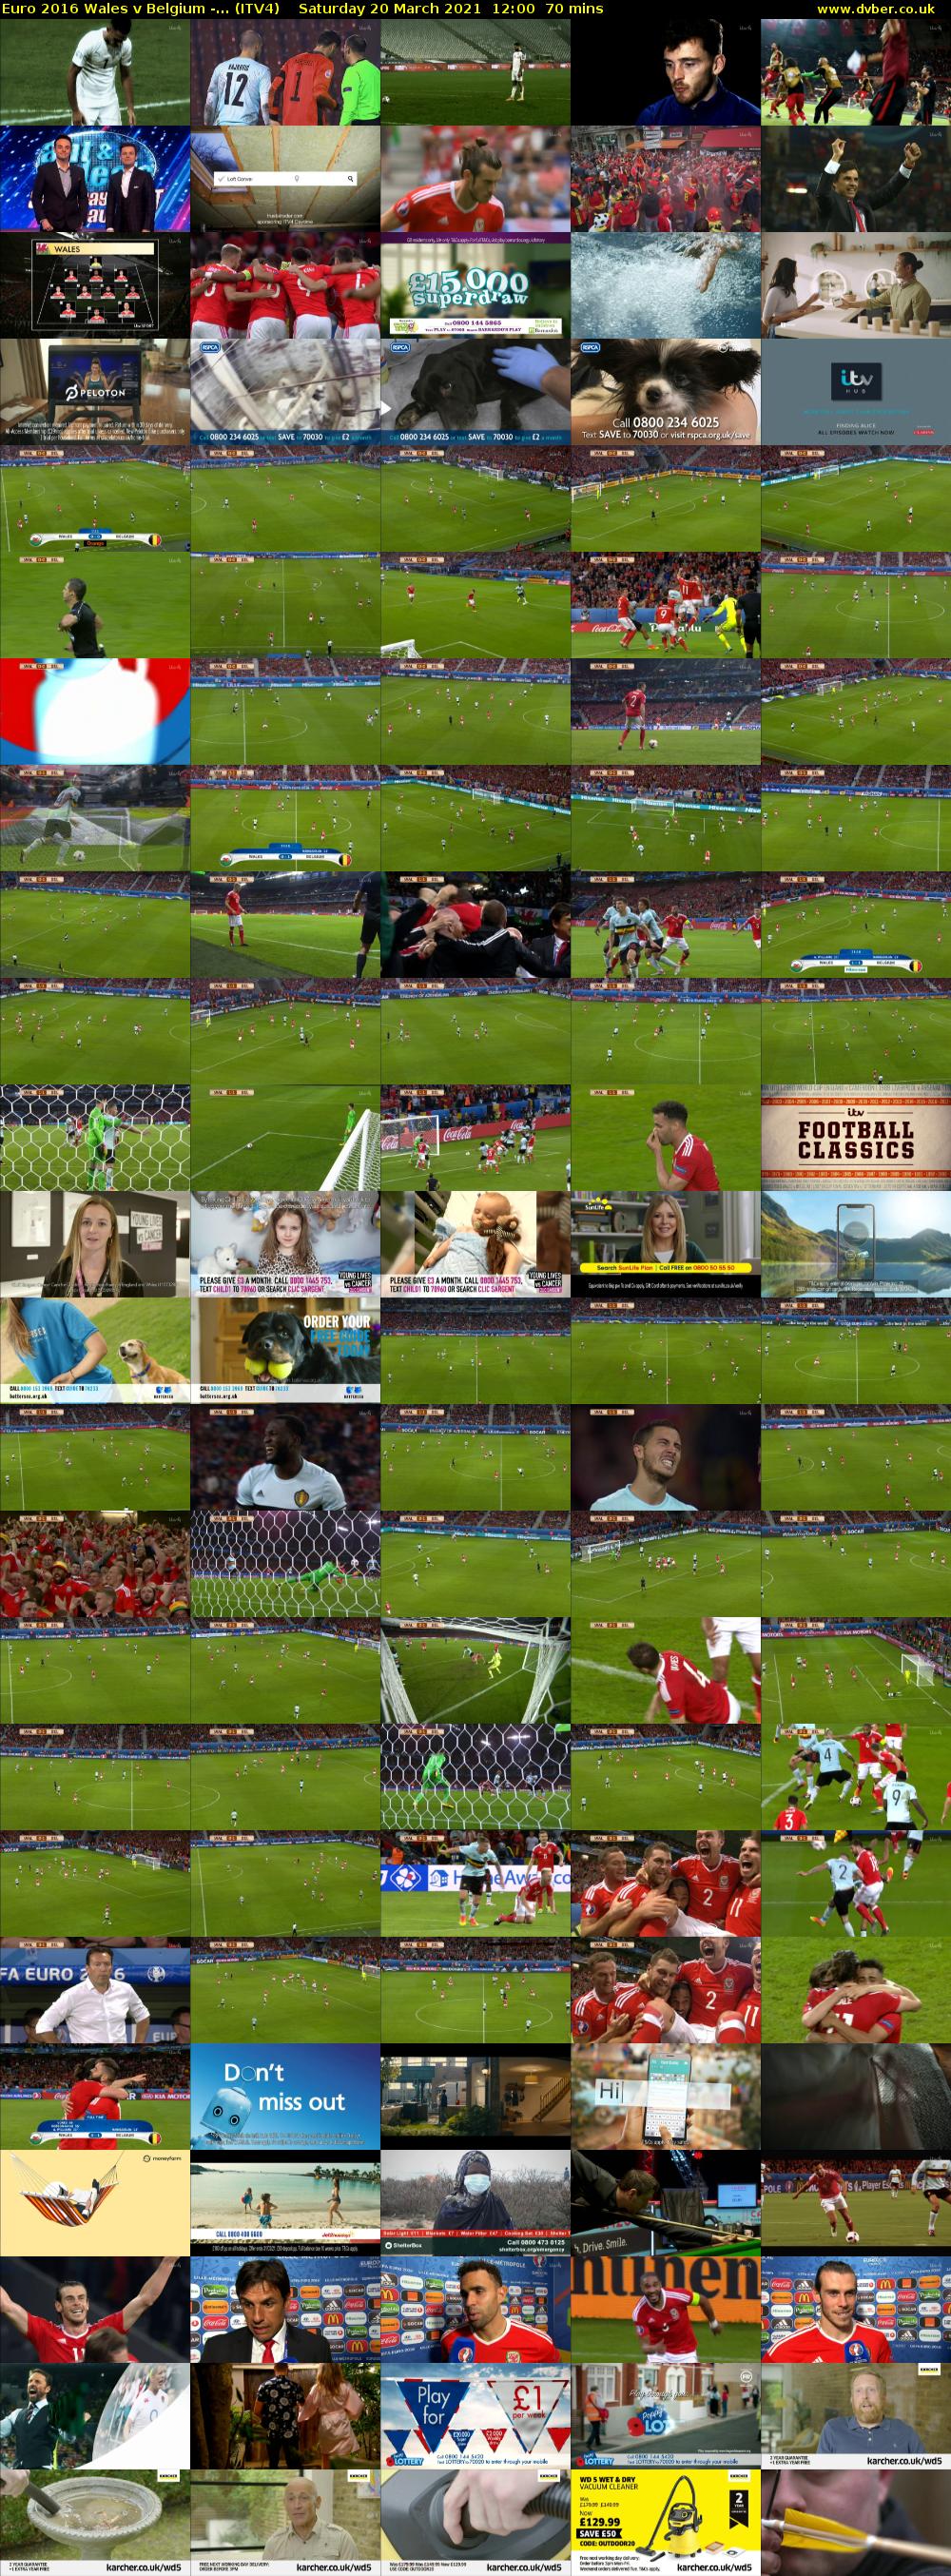 Euro 2016 Wales v Belgium -... (ITV4) Saturday 20 March 2021 12:00 - 13:10